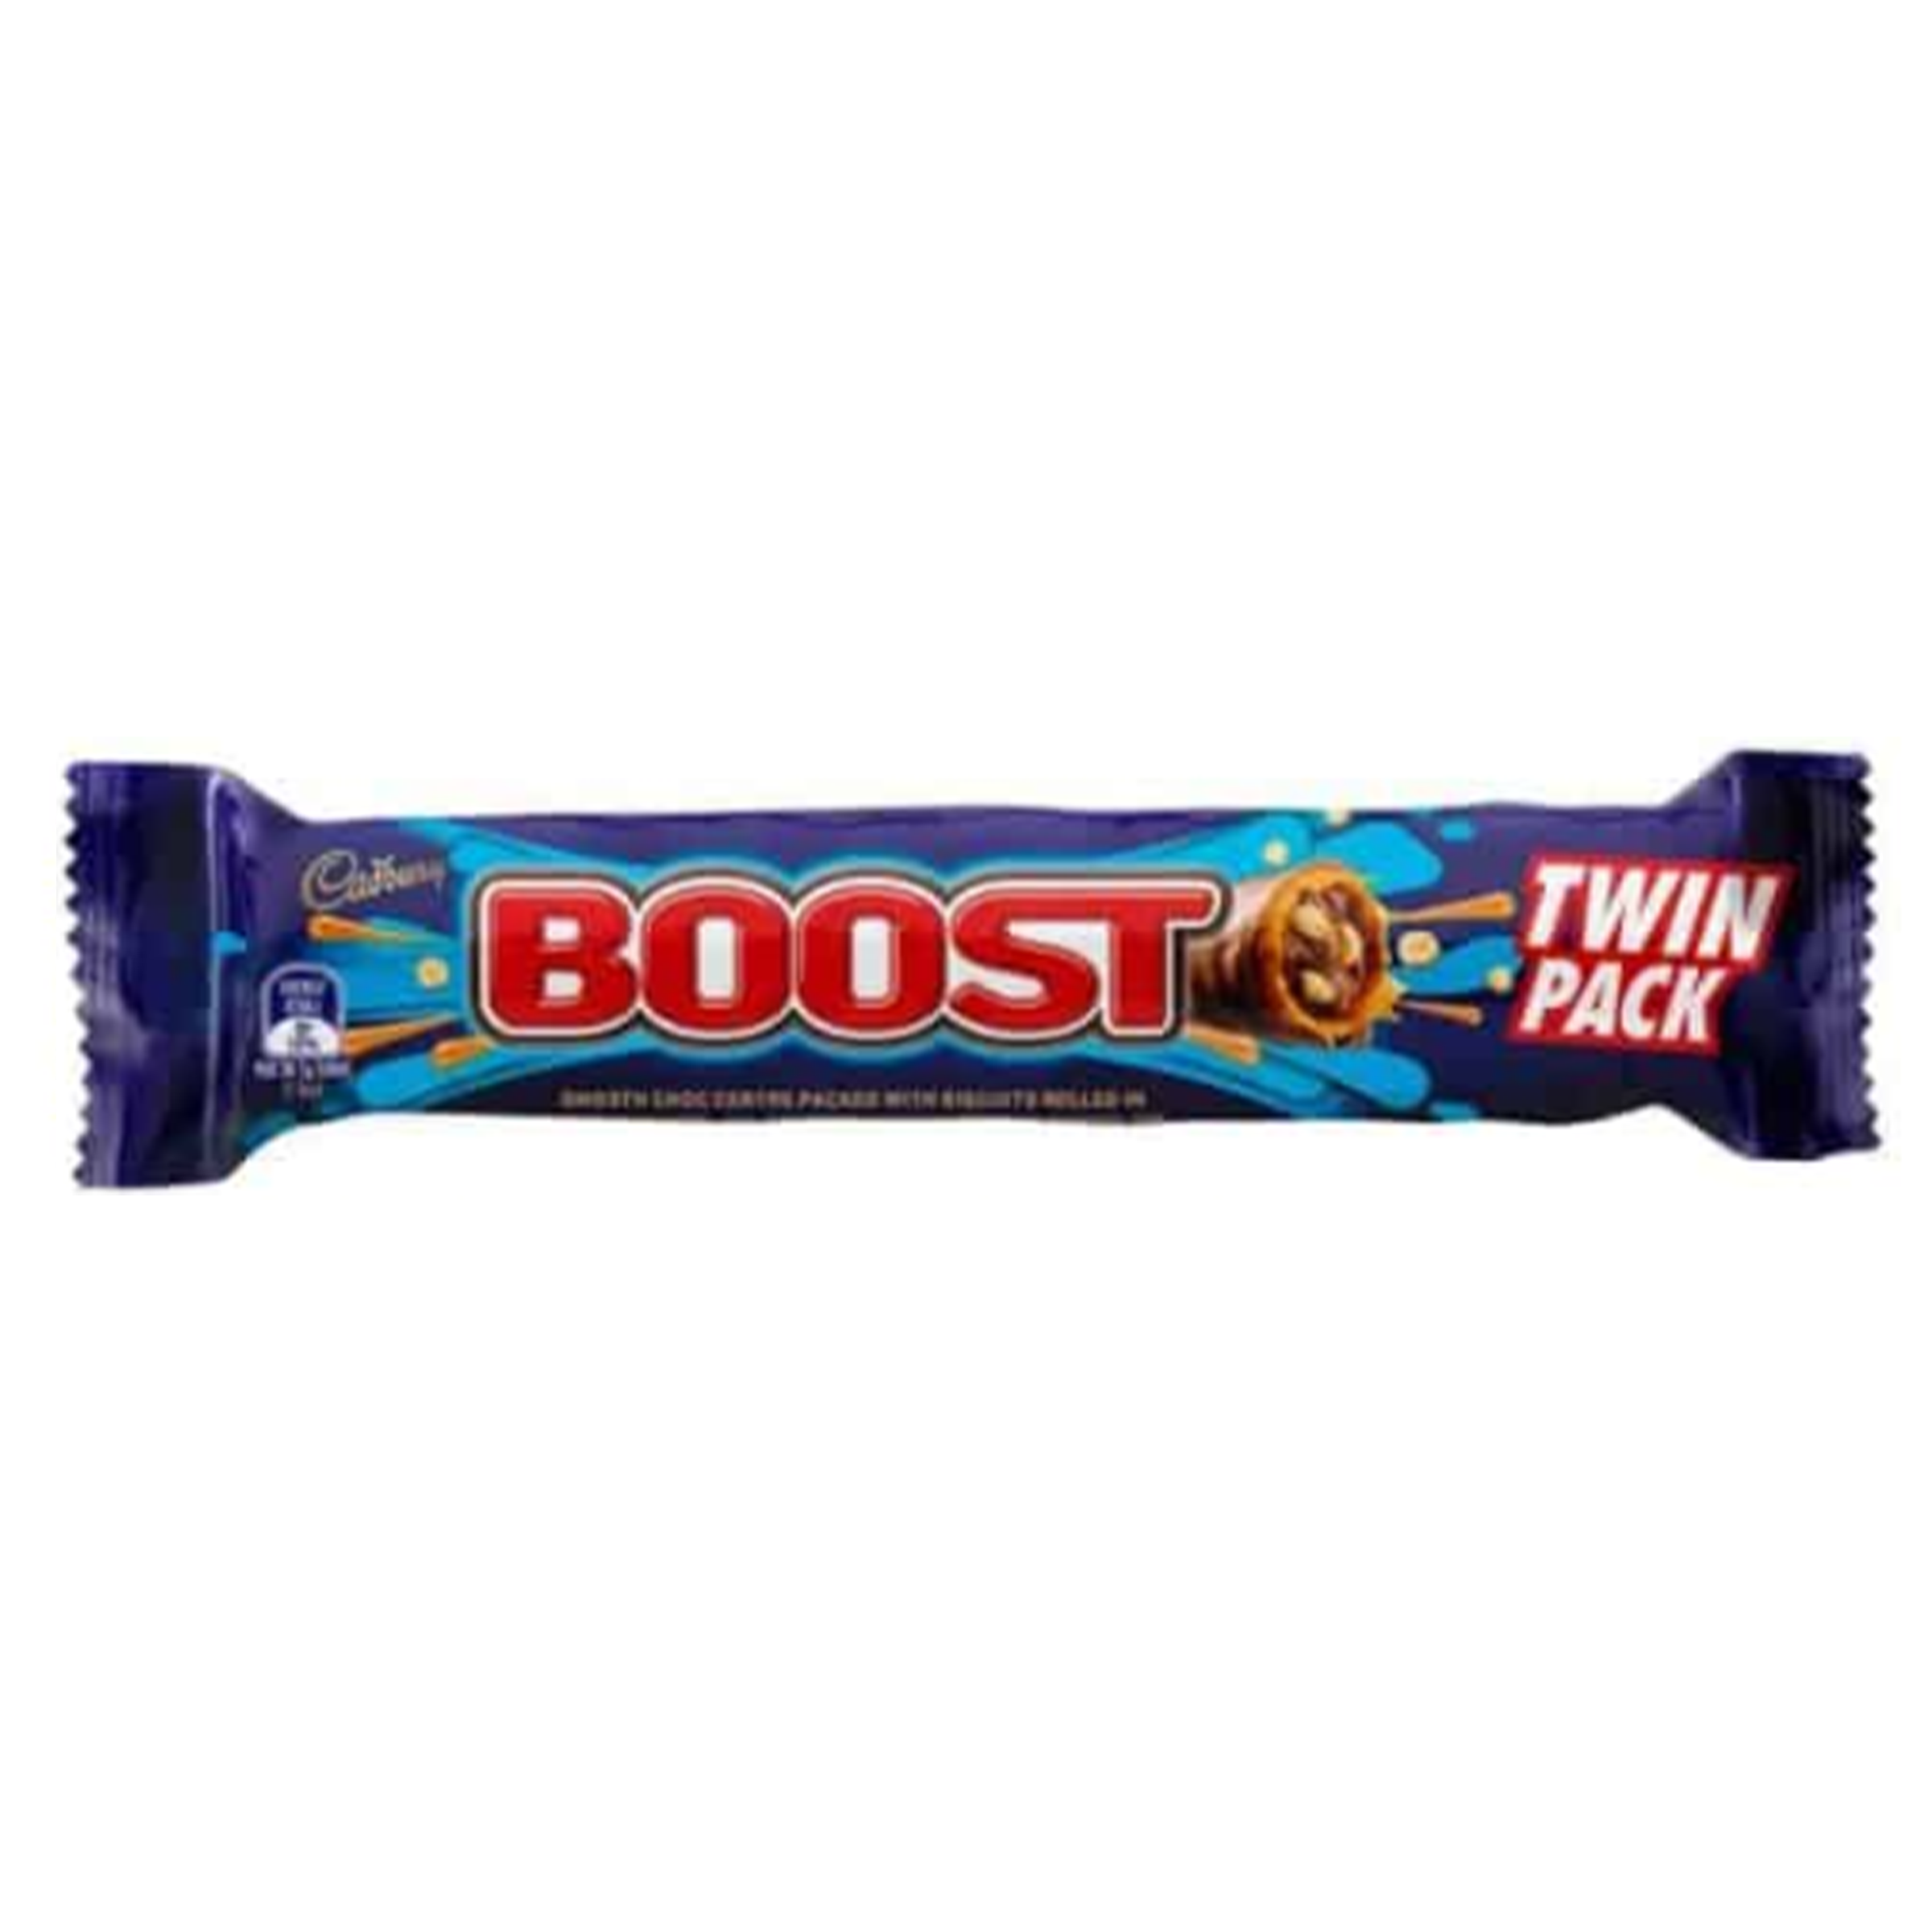 Cadbury Boost - Australia